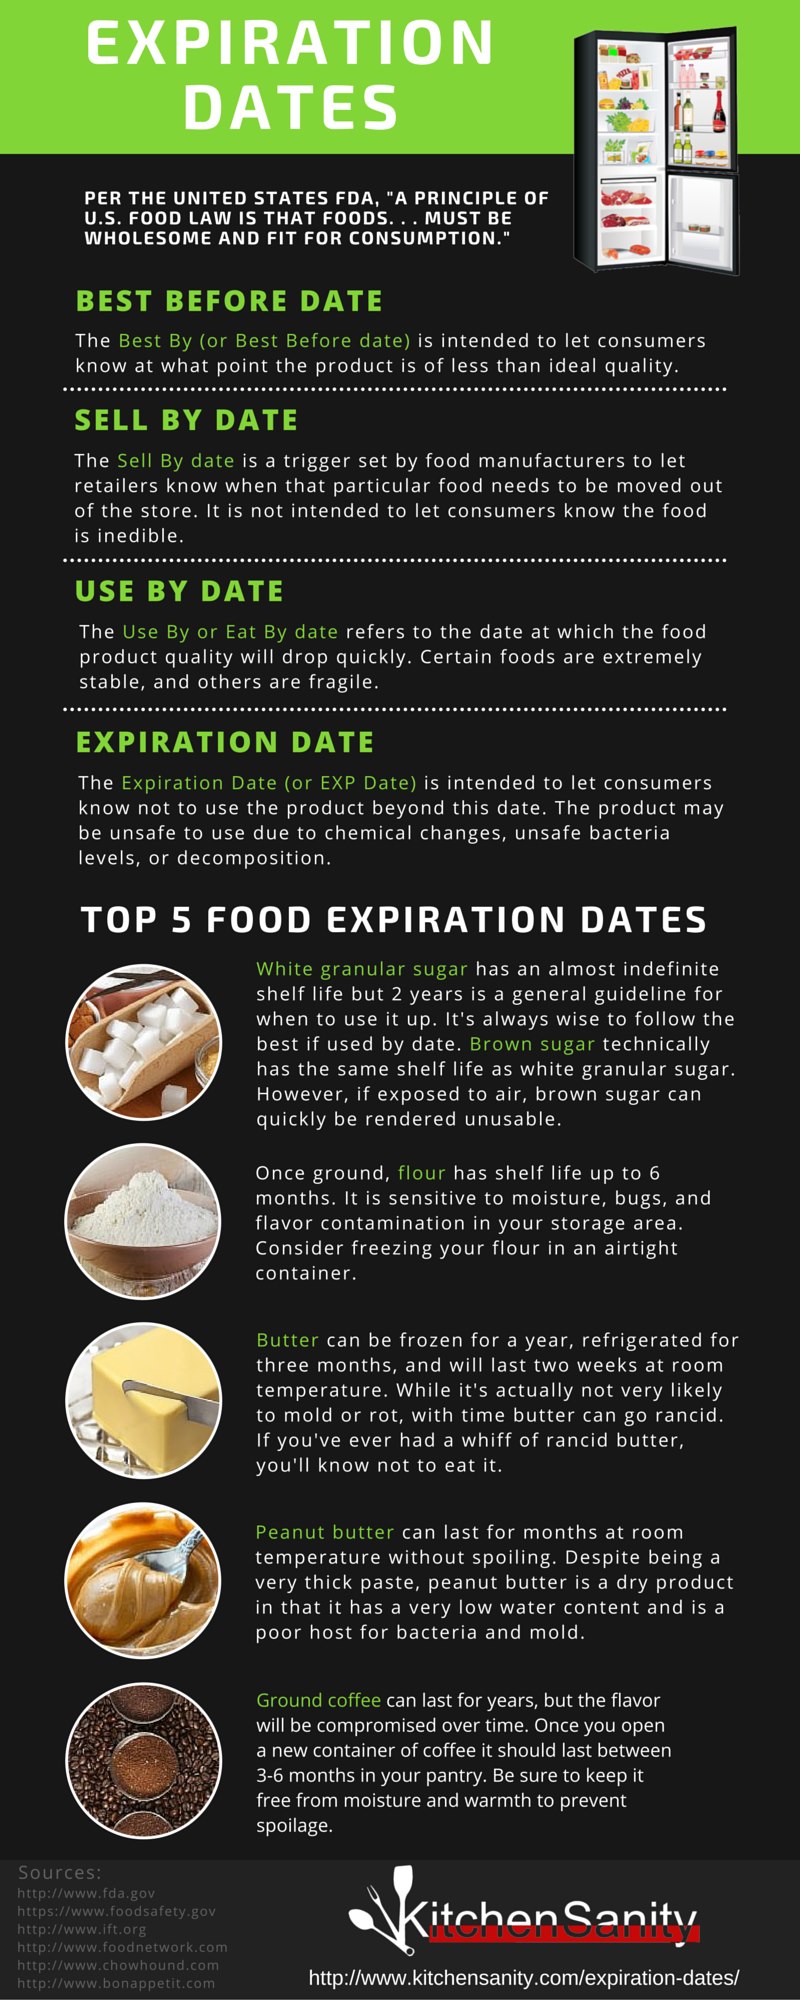 food-expiration-dates-safety-kitchensanity